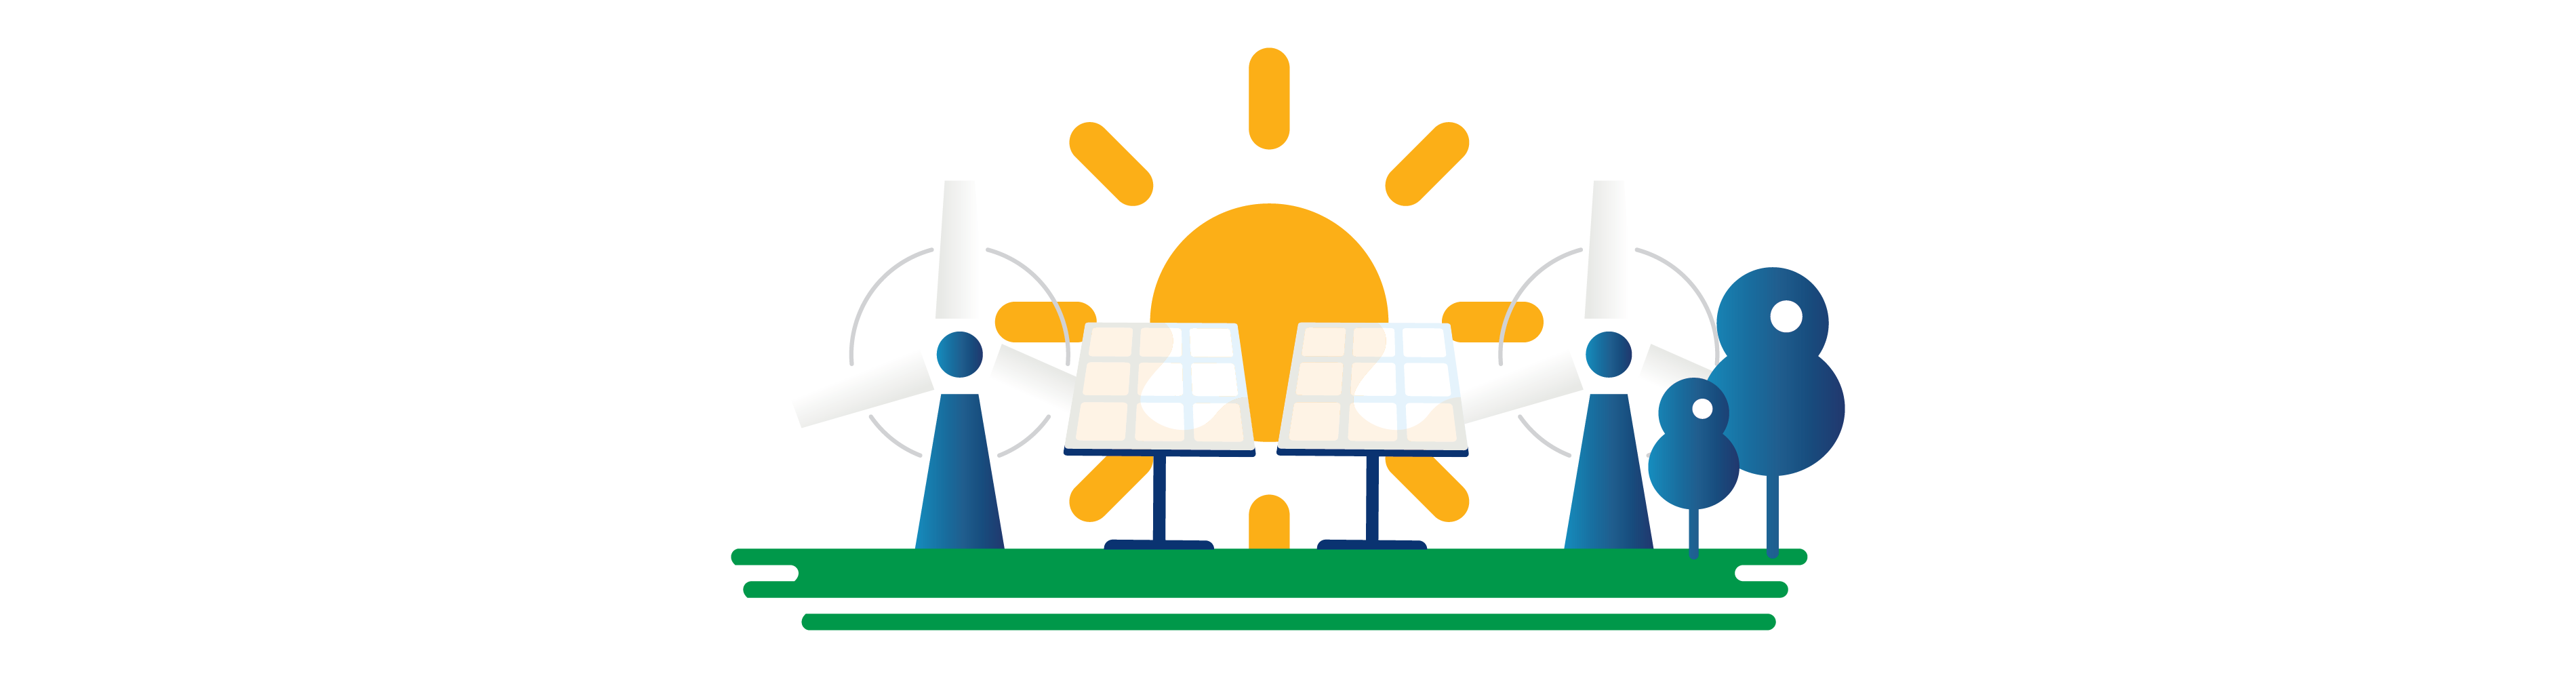 Solar-Panels-Wind-Turbine-Illustration.png